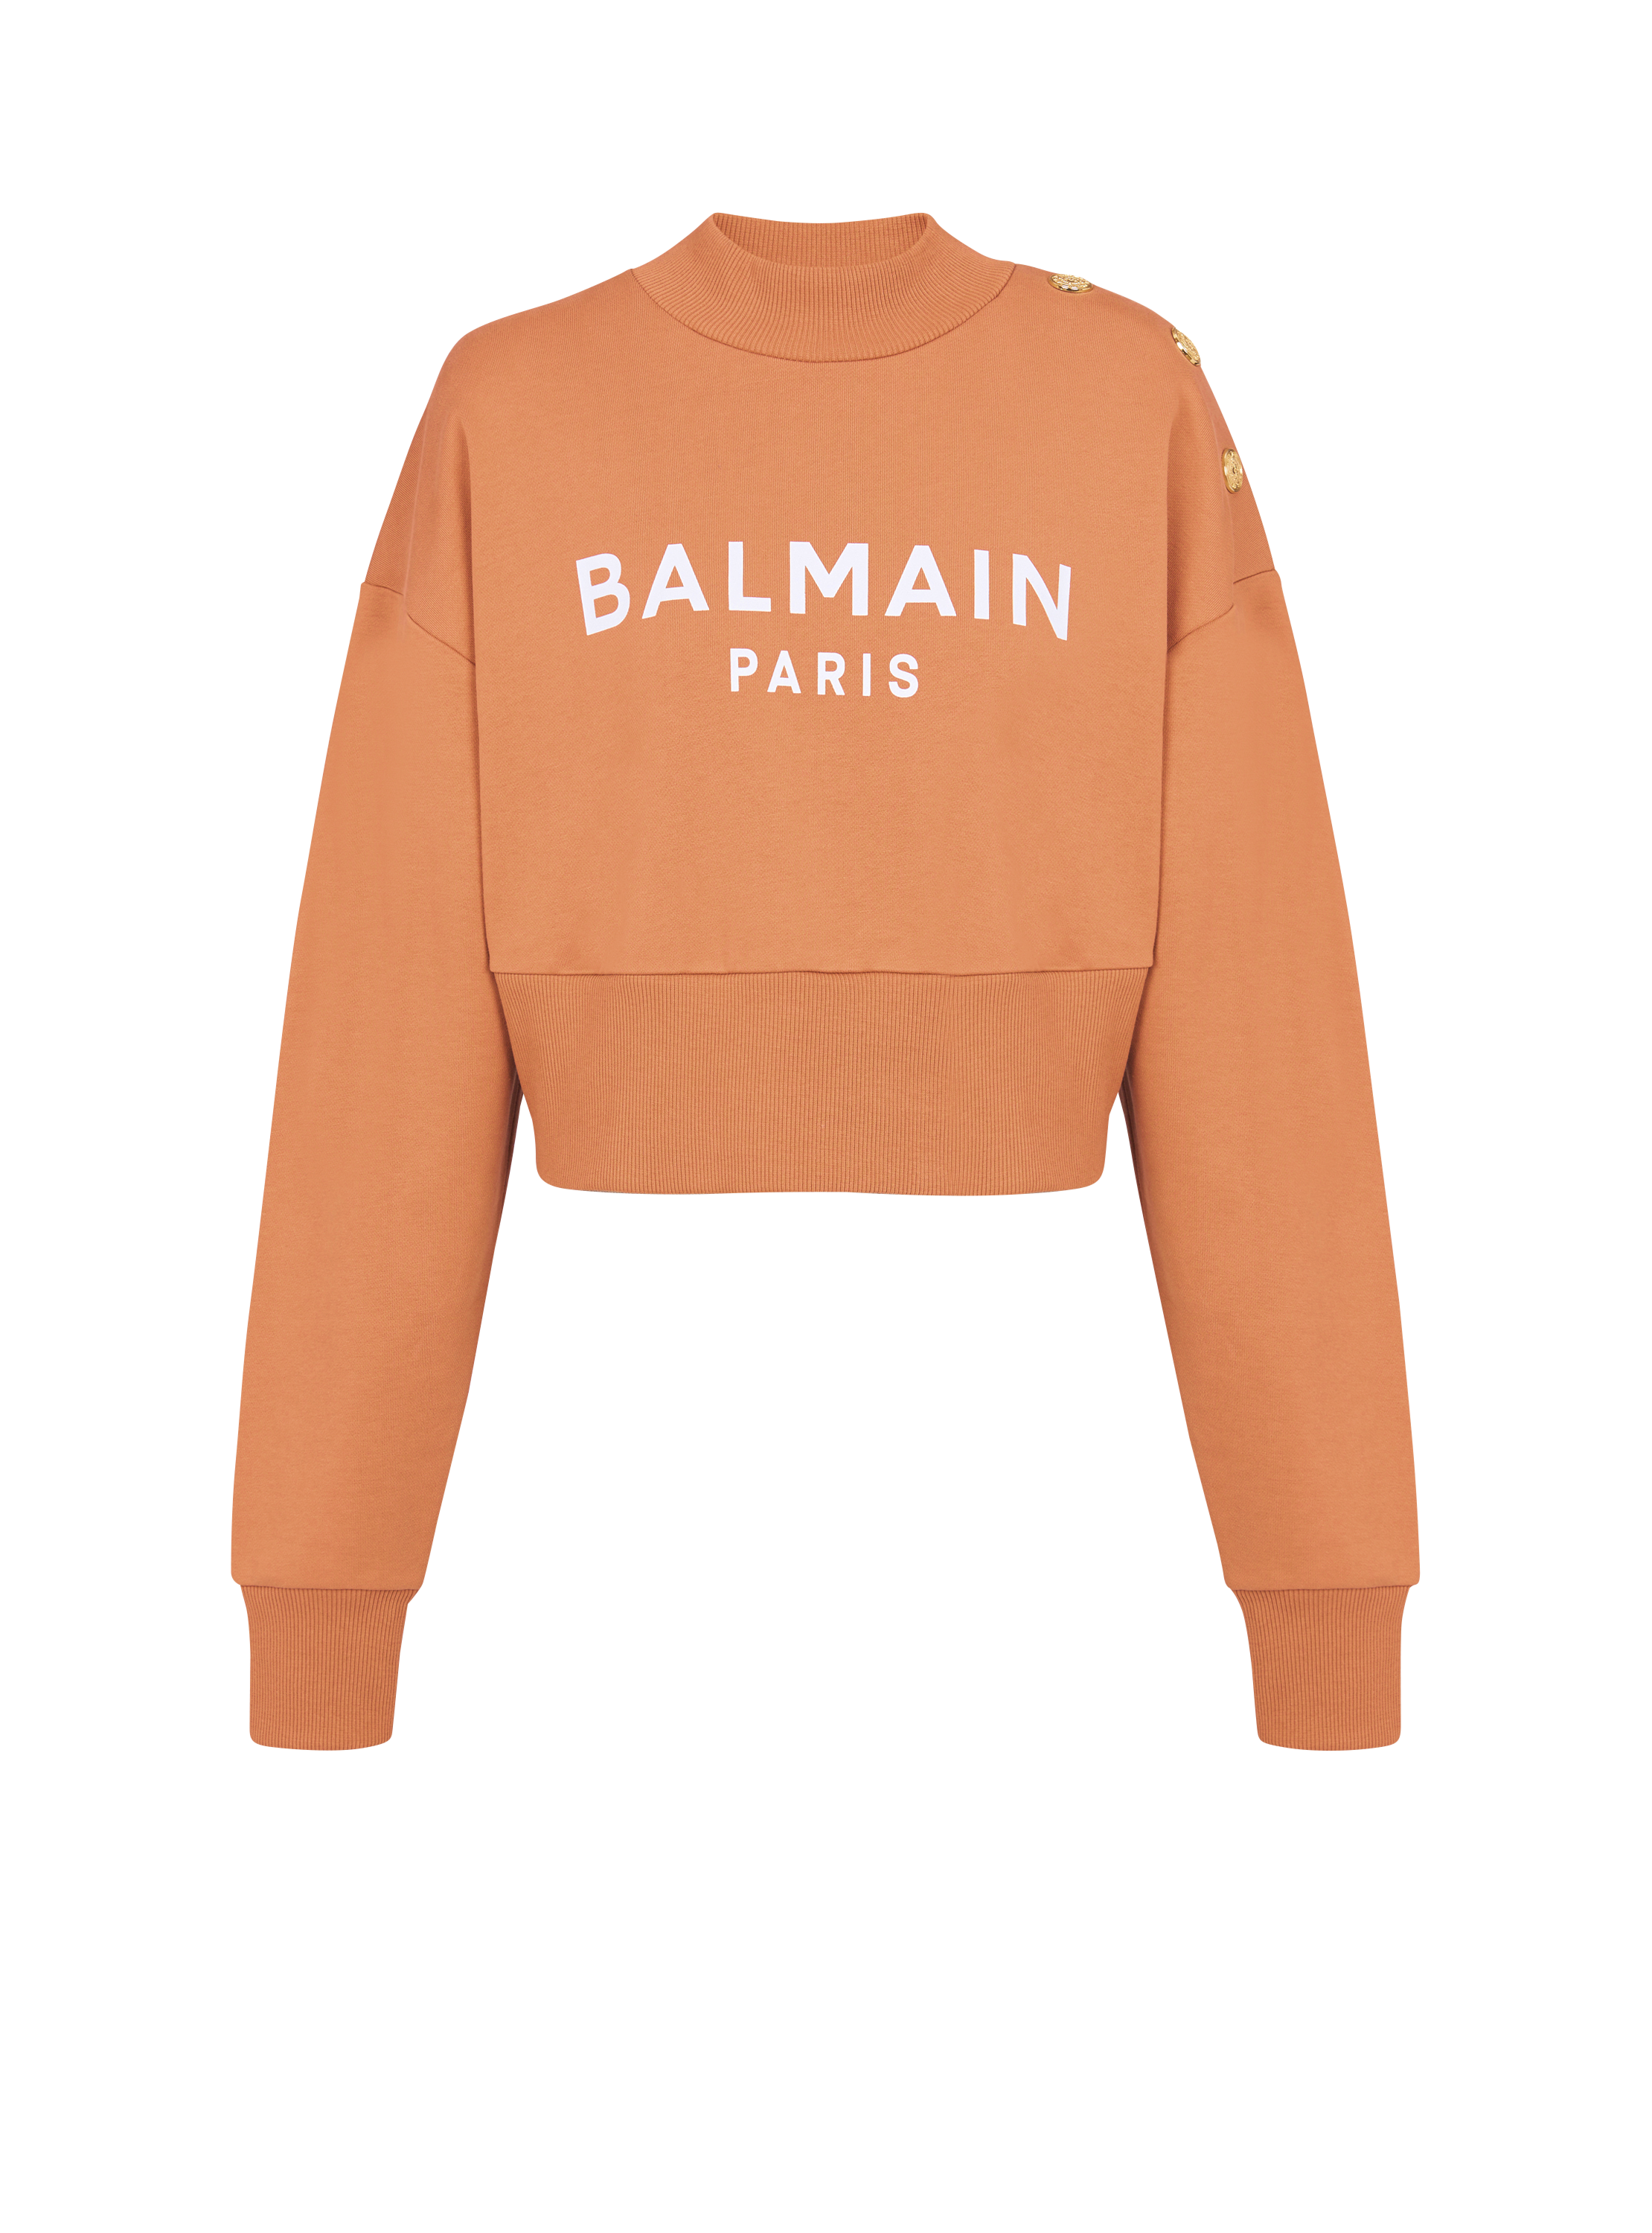 Kurzes, geknöpftes Sweatshirt mit Balmain Logo-Print, braun, hi-res